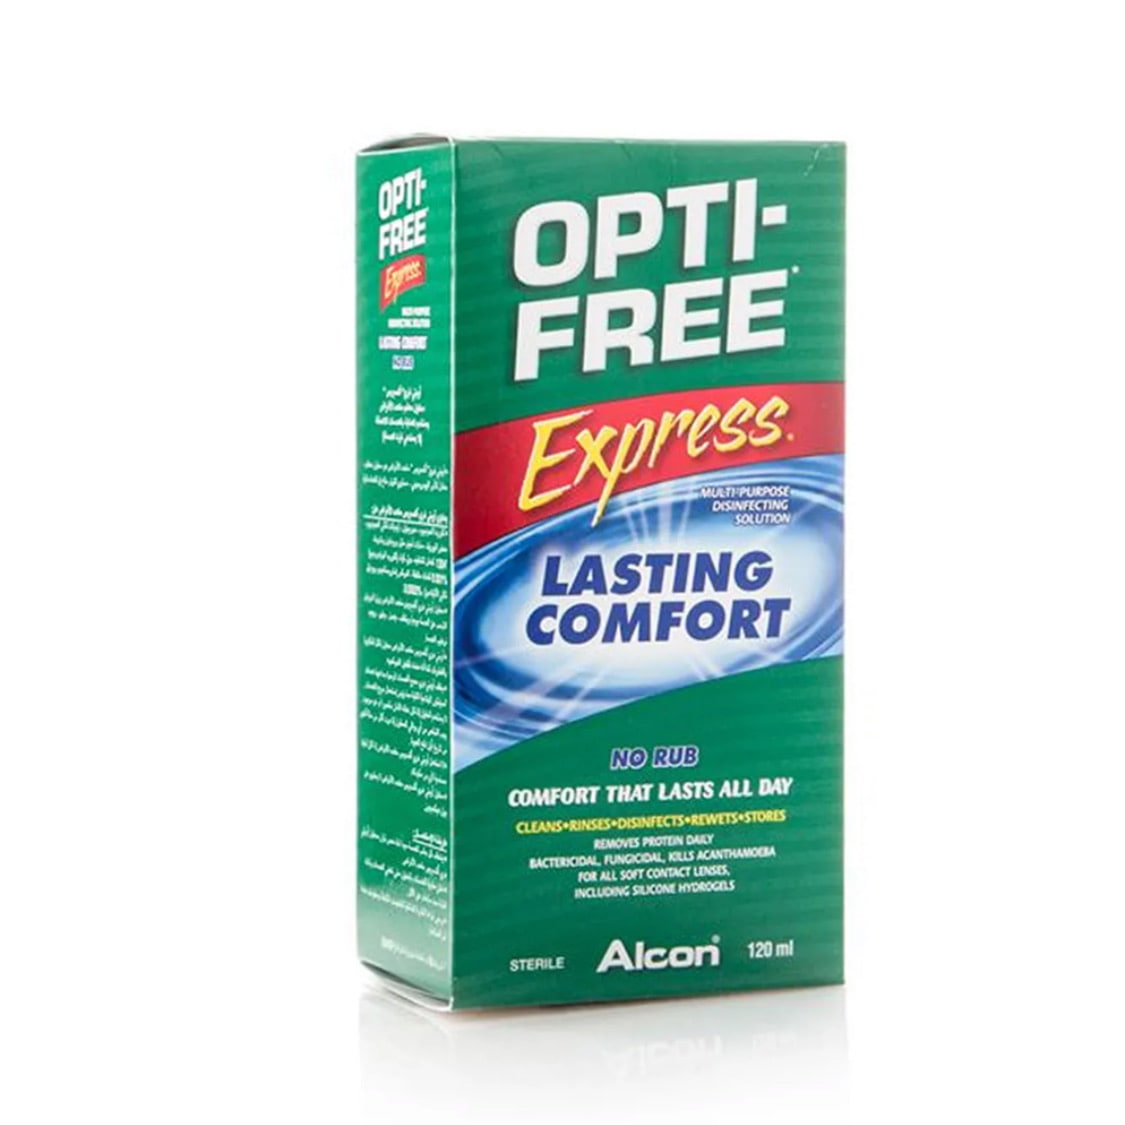 Opti Free Contact Lenses Solution 120 ml